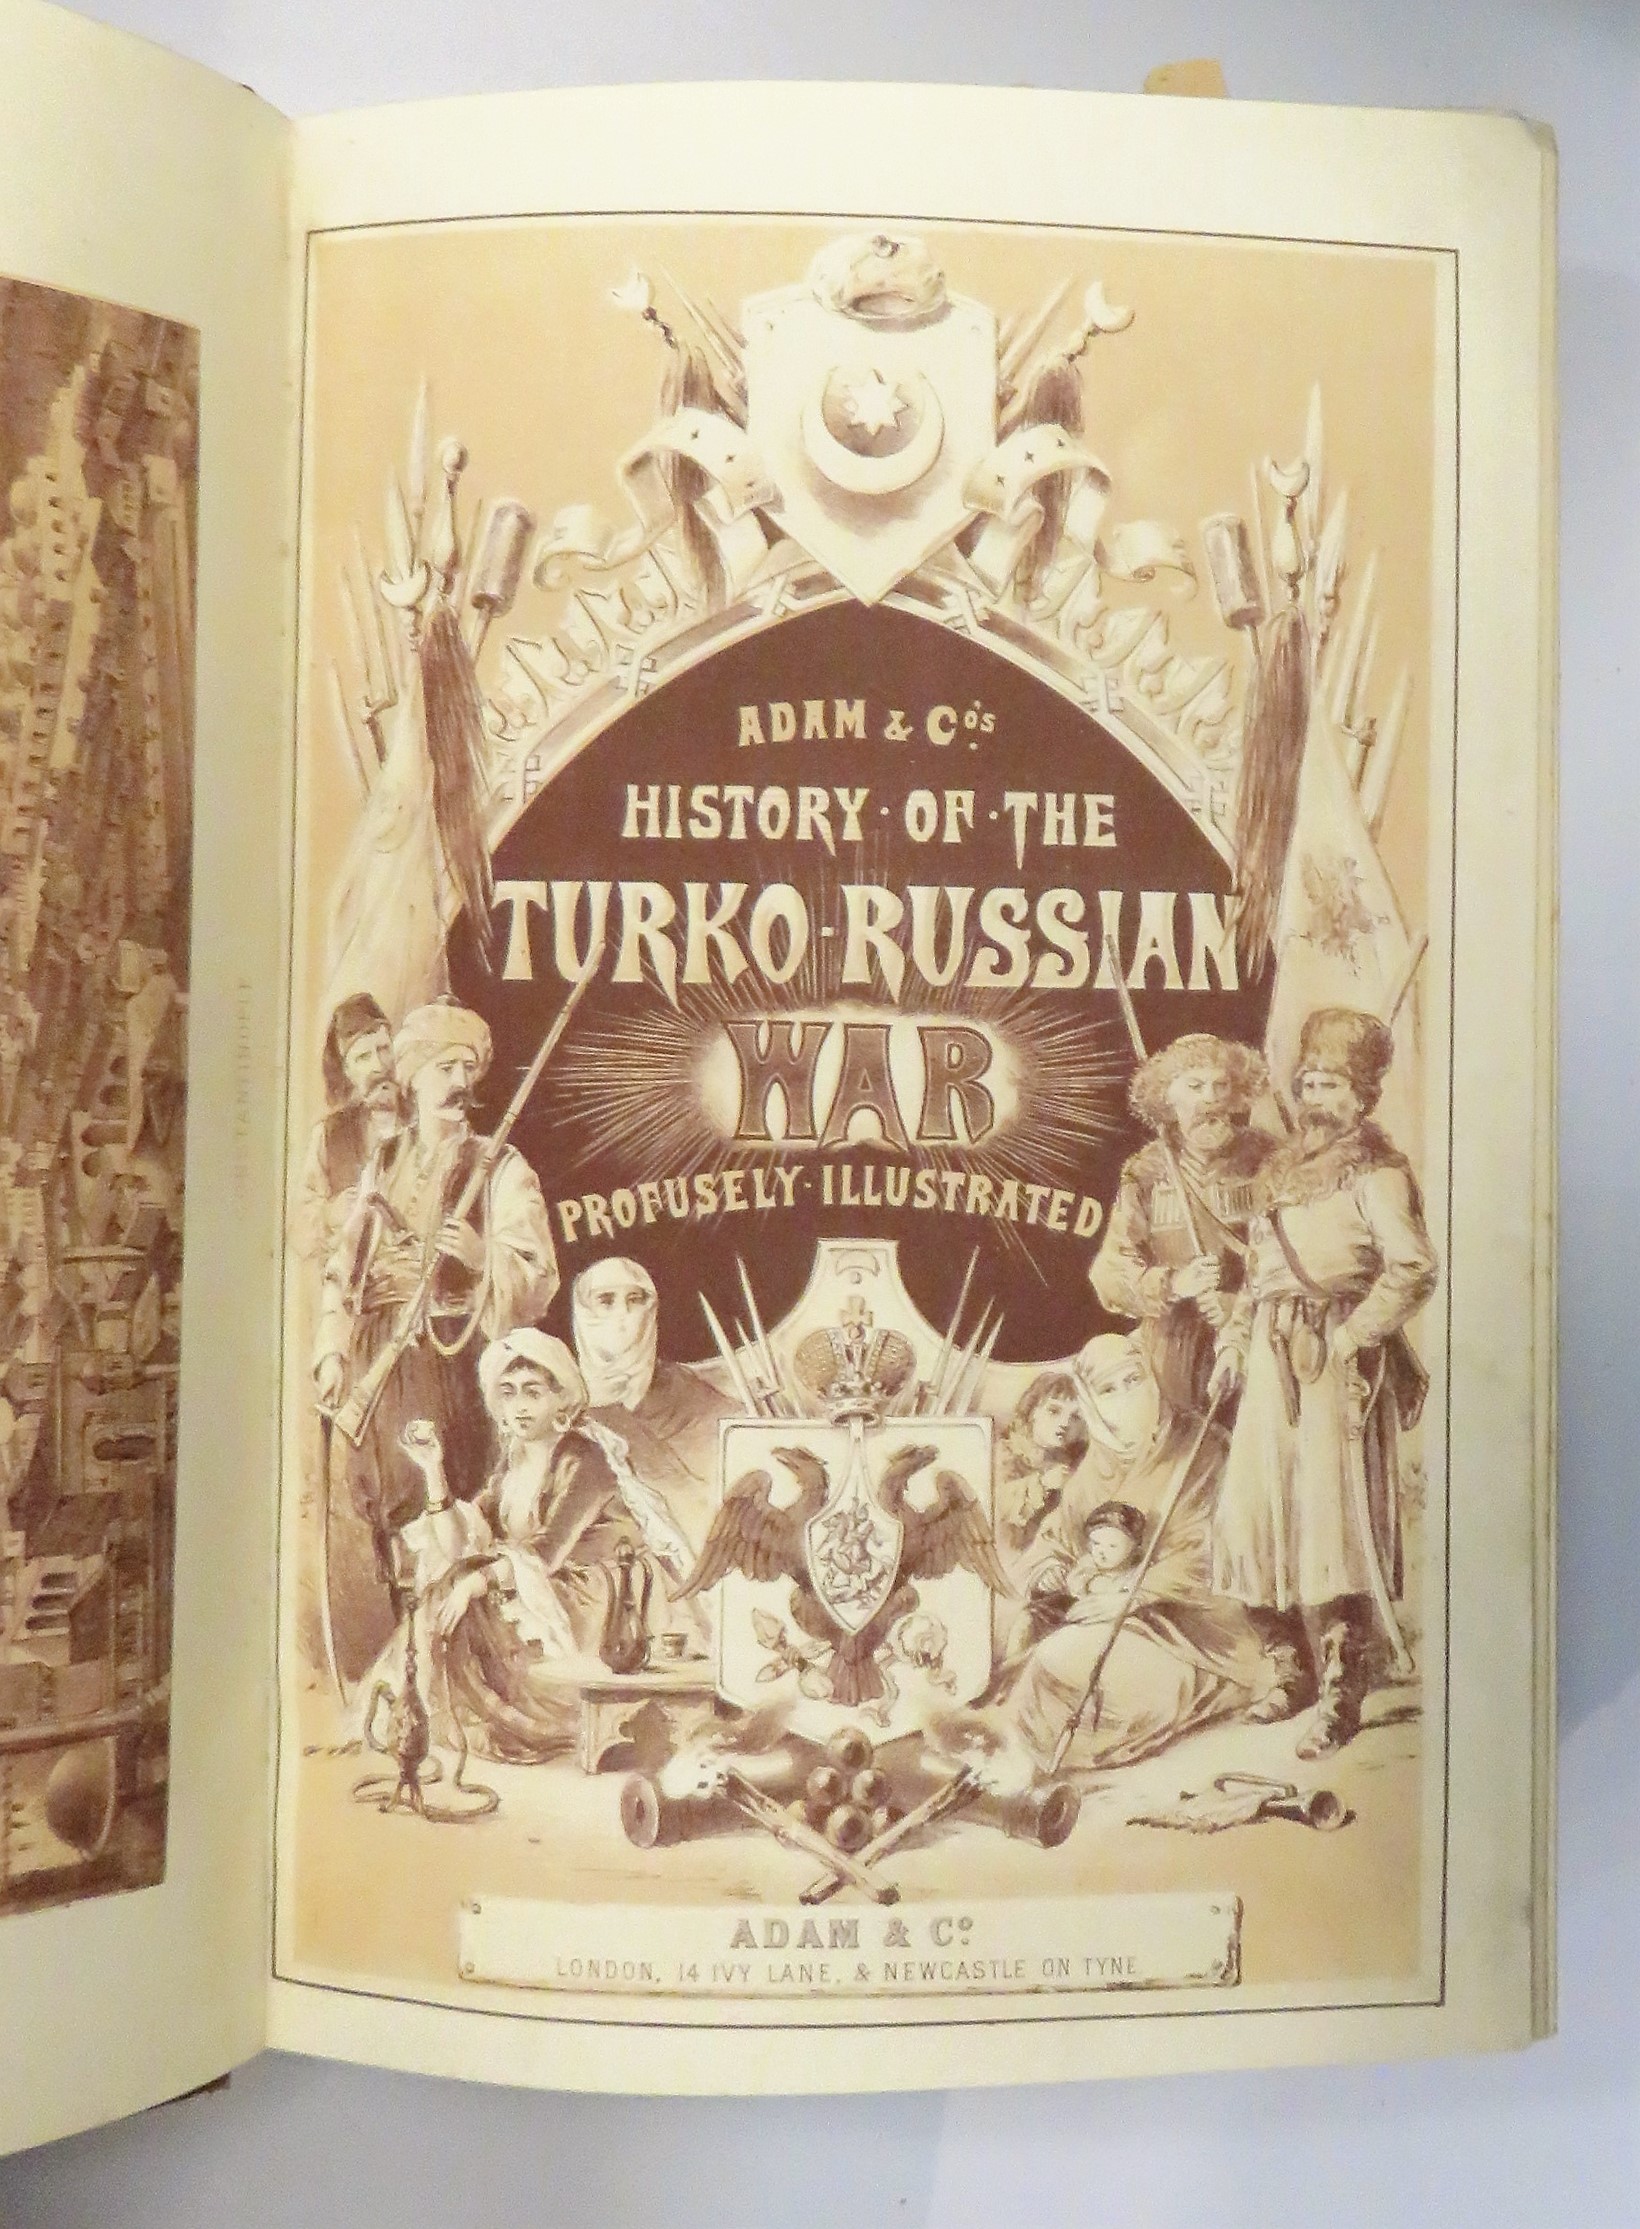 Historical Narrative of the Turko-Russian War